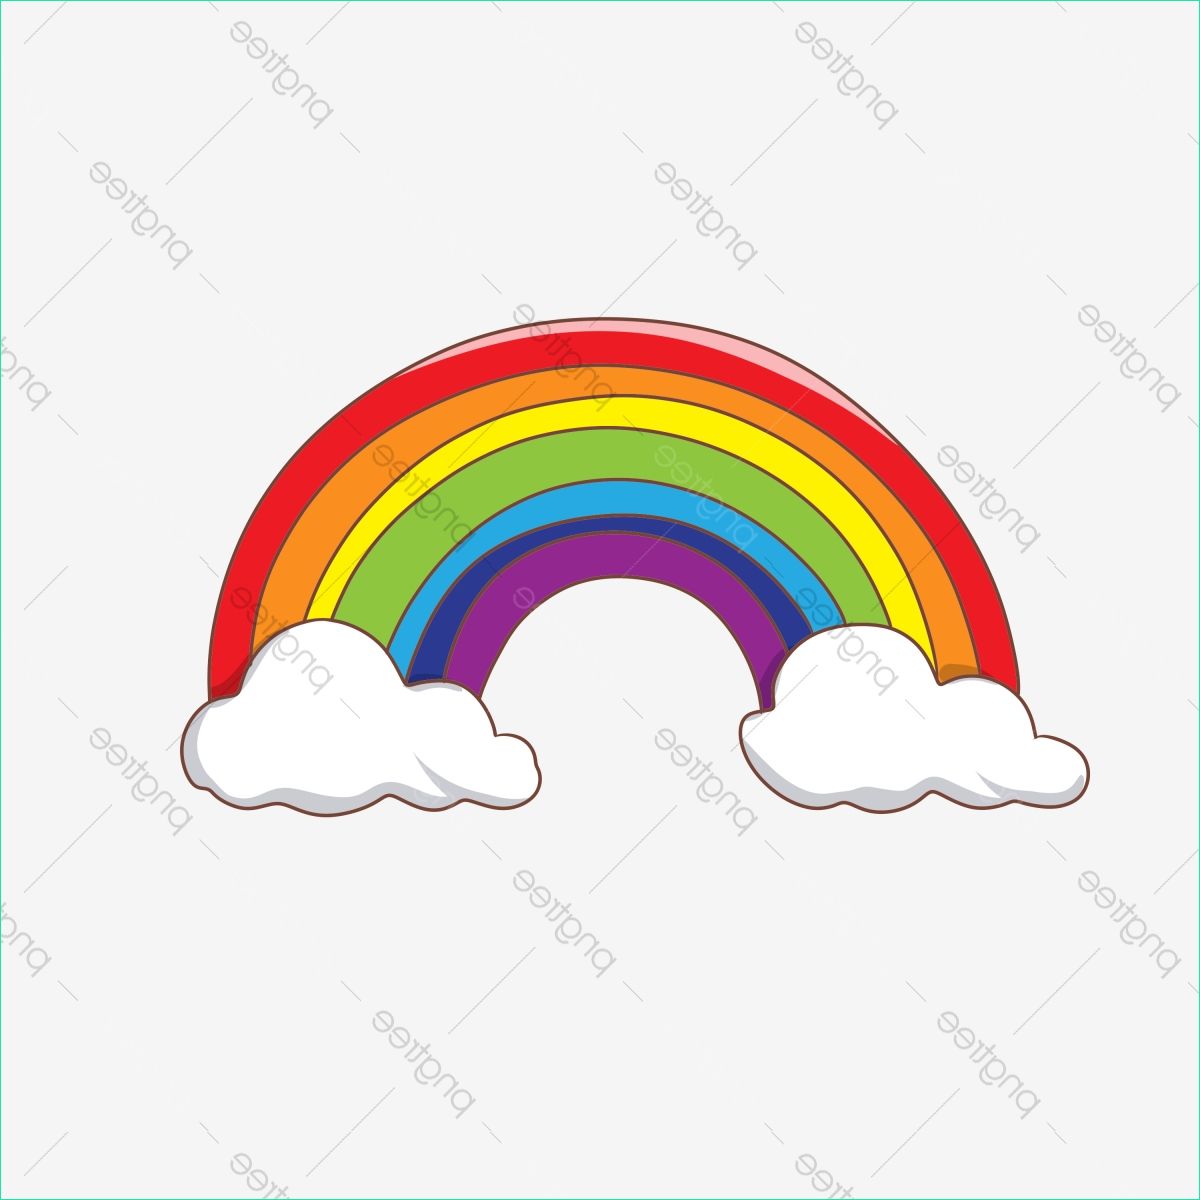 beautiful creative rainbow illustration